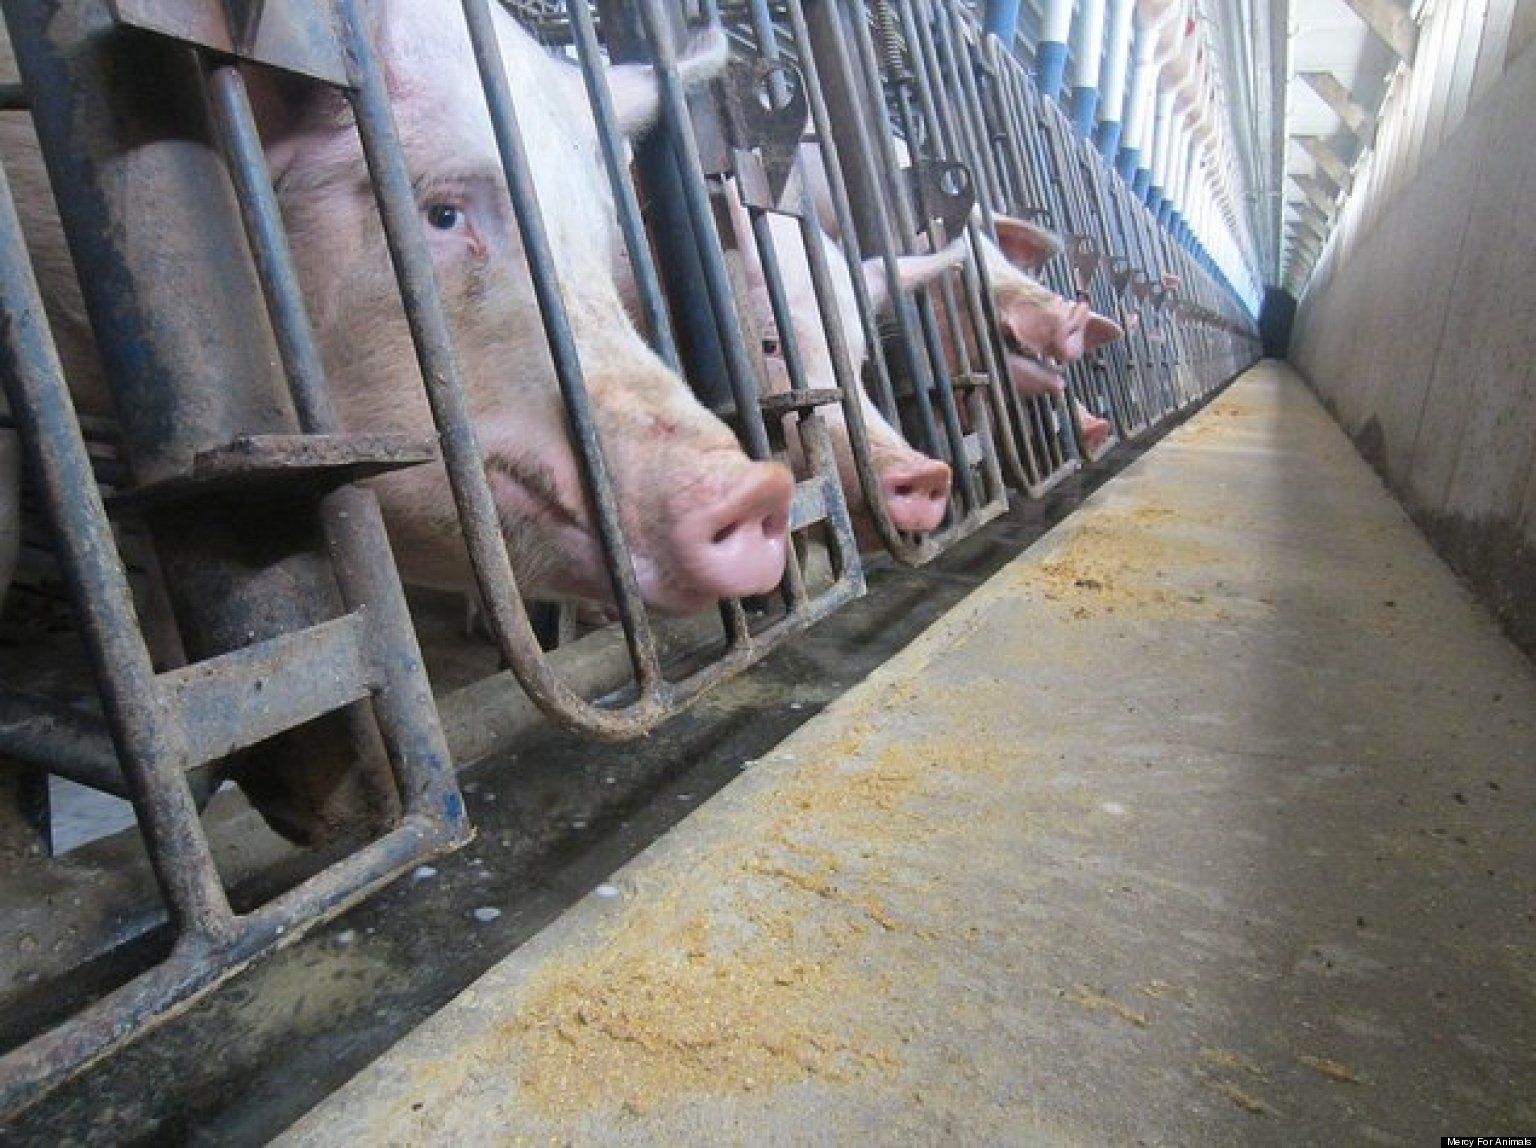 animal cruelty in factory farming